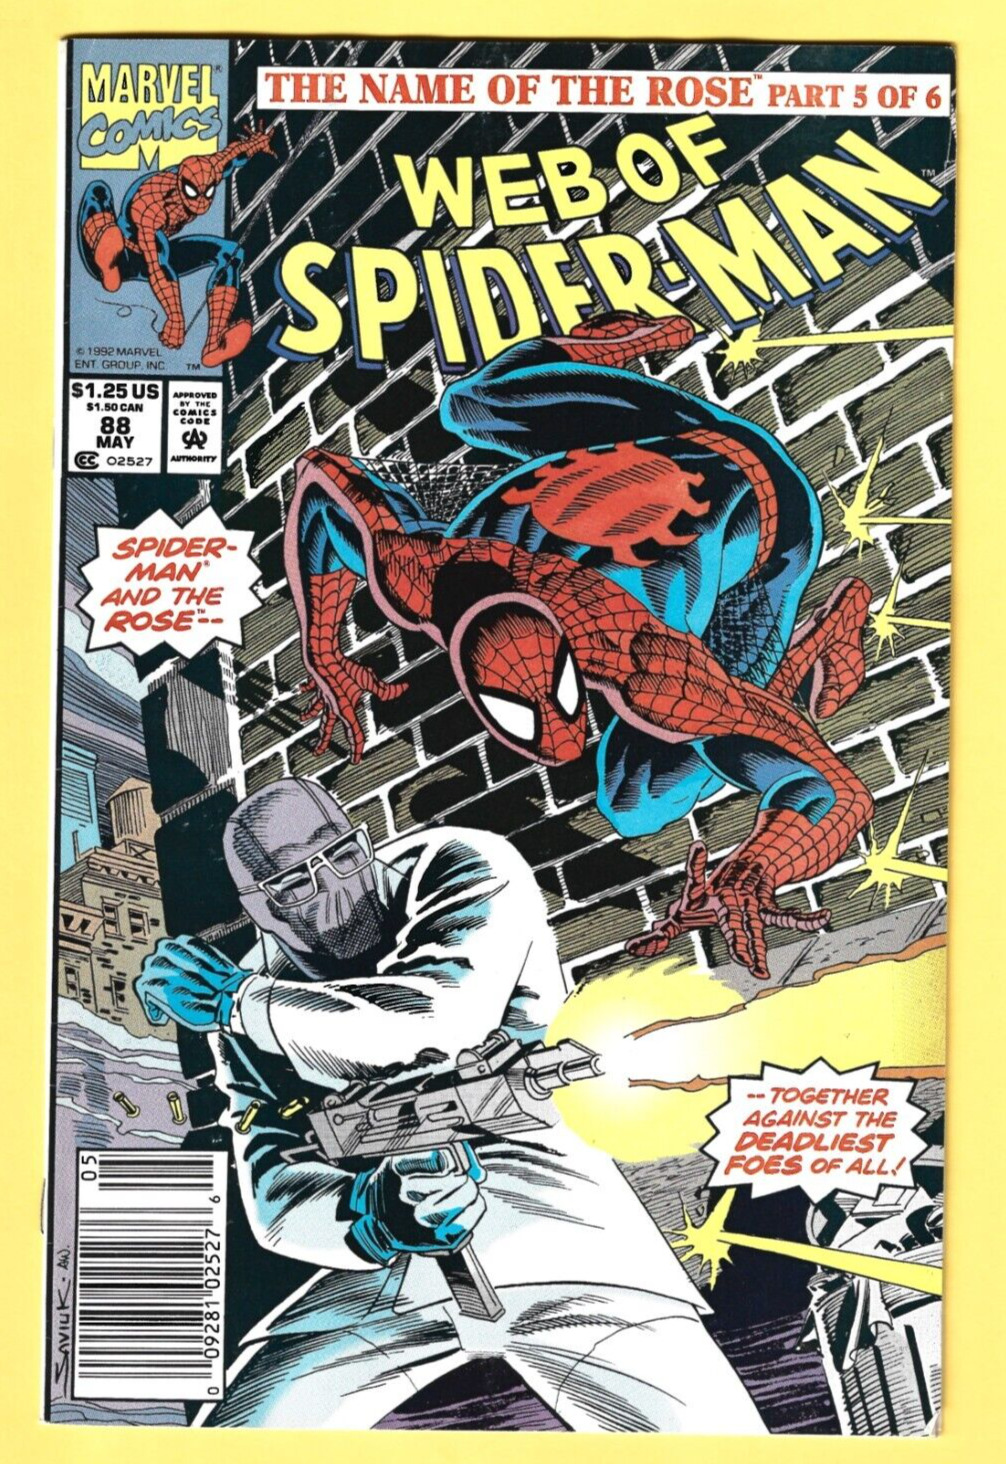 WEB OF SPIDER-MAN #88 MARVEL COMIC BOOK